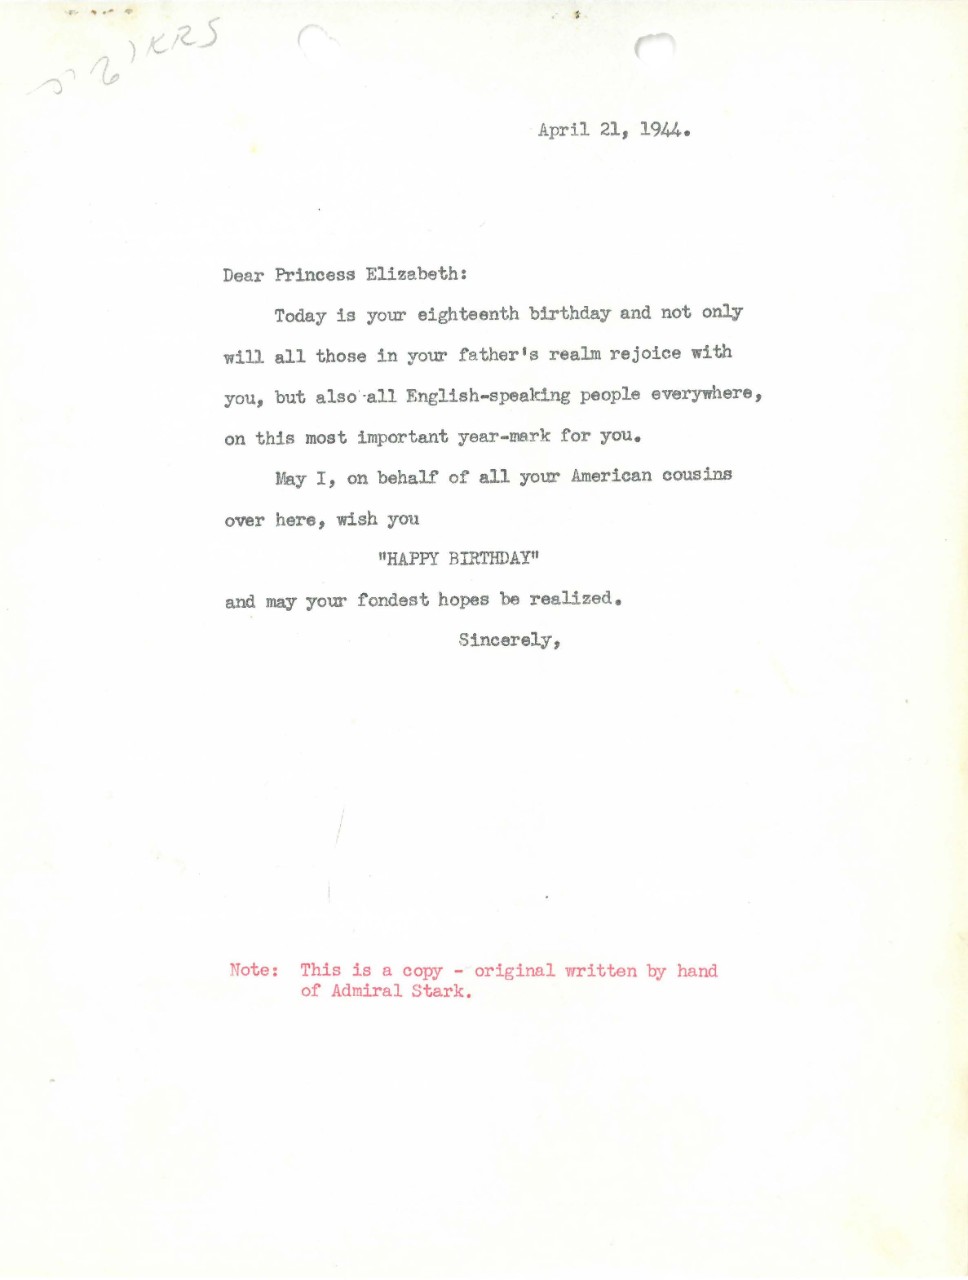 Letter from Admiral Stark to Princess Elizabeth, April 21, 1944